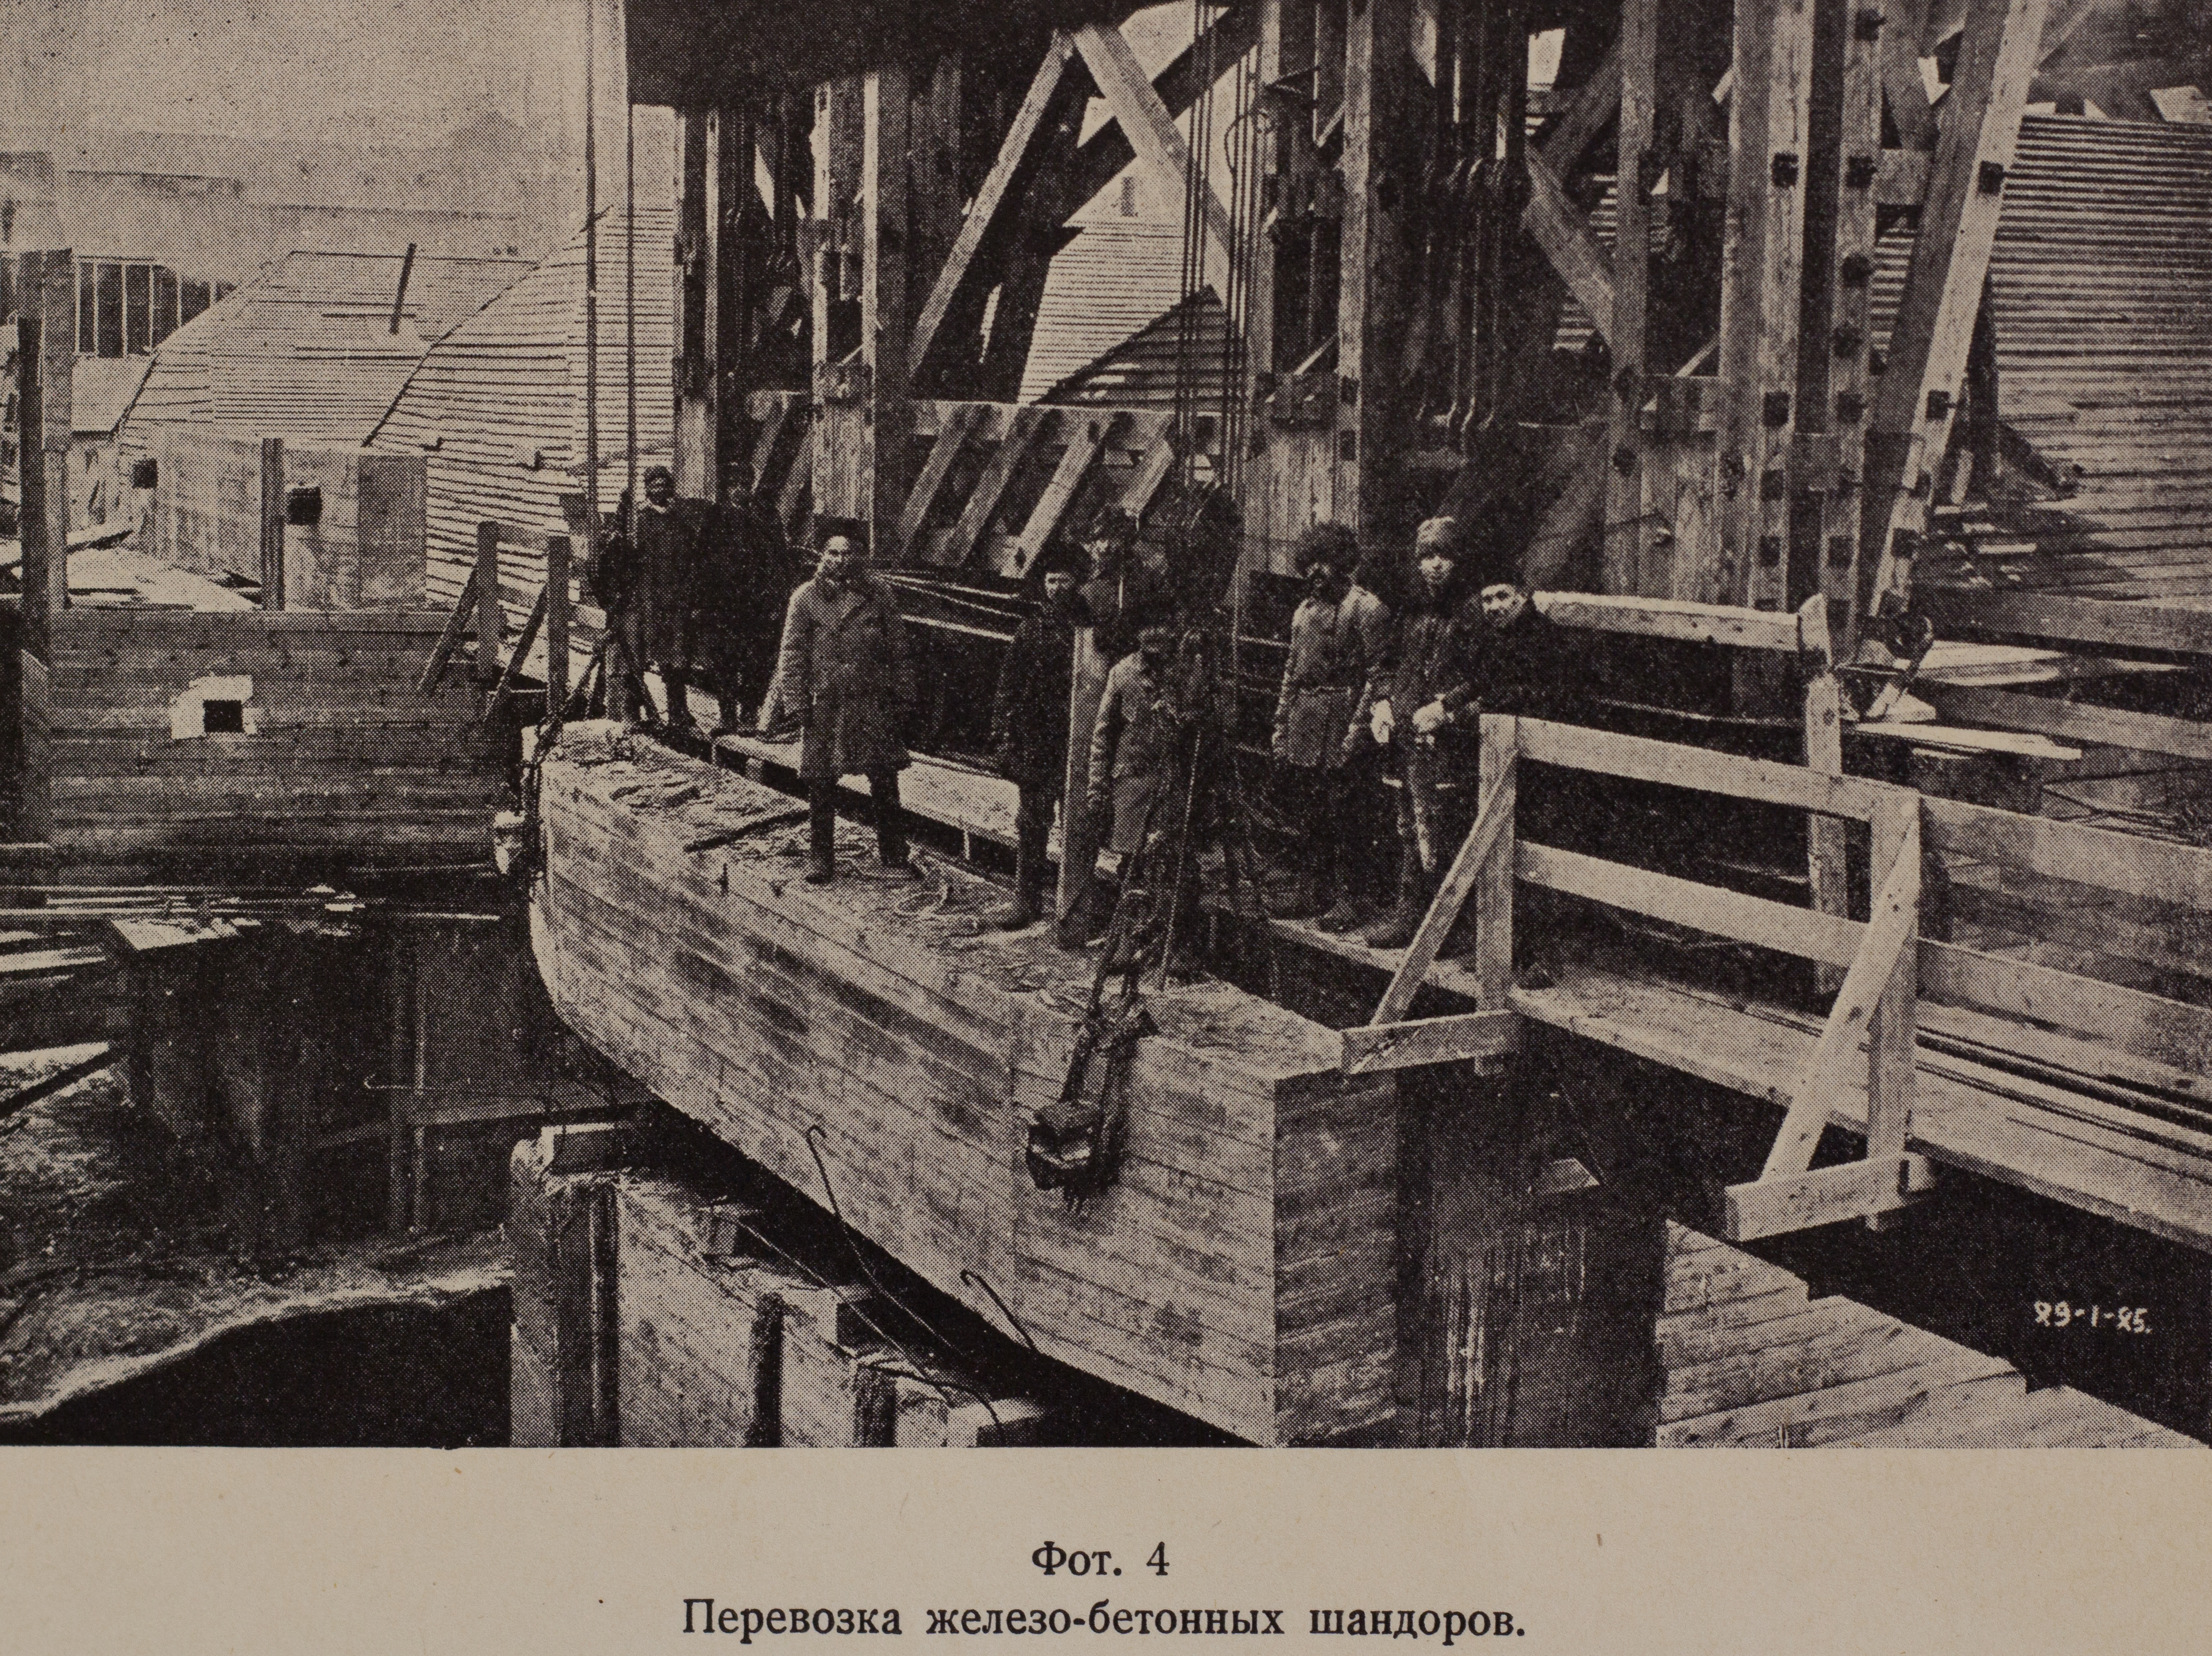 Перевозка железобетонных шандоров (1925 г.)